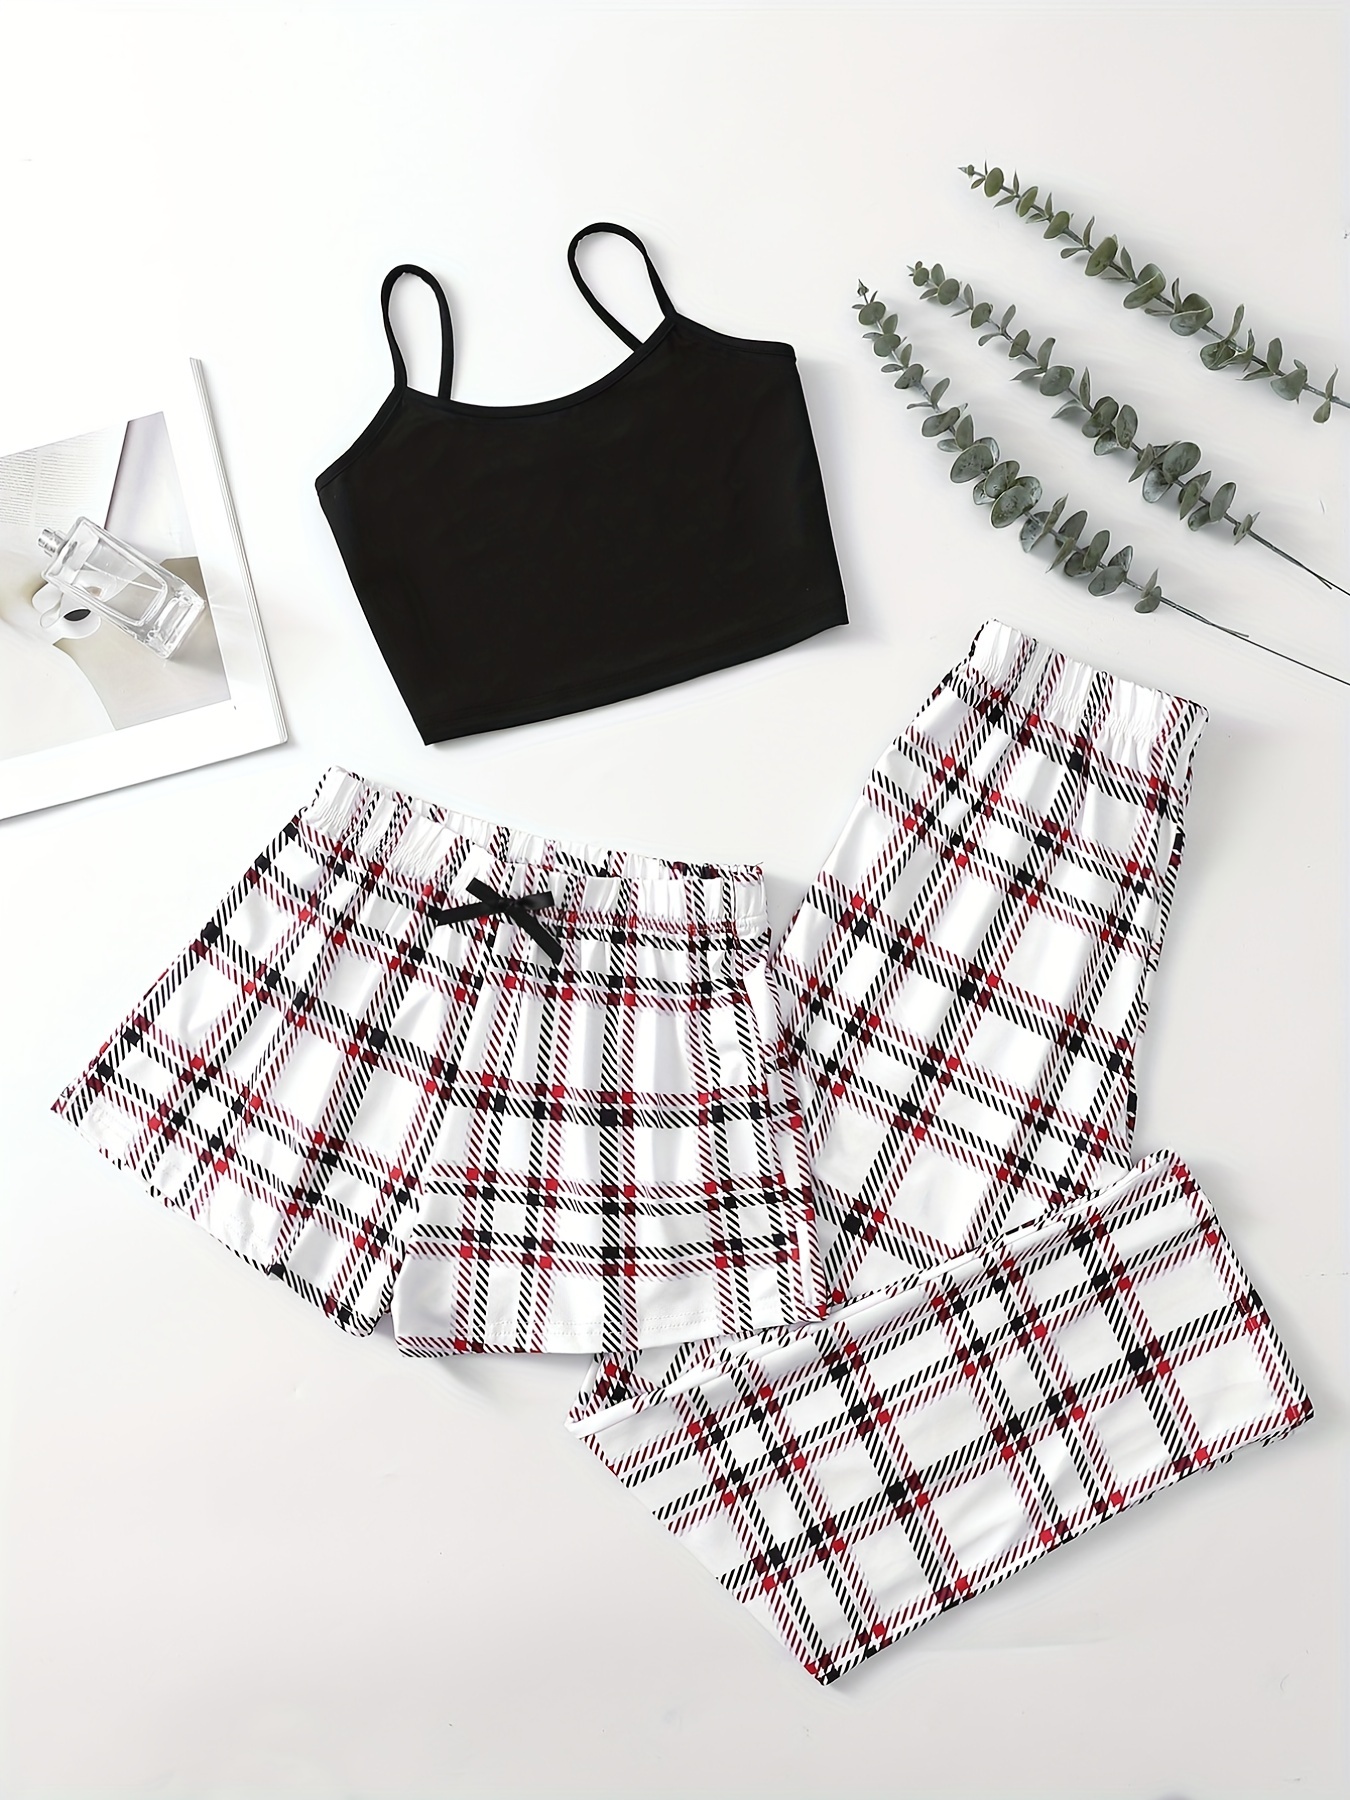 Women's 2 Piece Lace Trim Pajama Sets Cami And Shorts Pj Sets Sleepwear